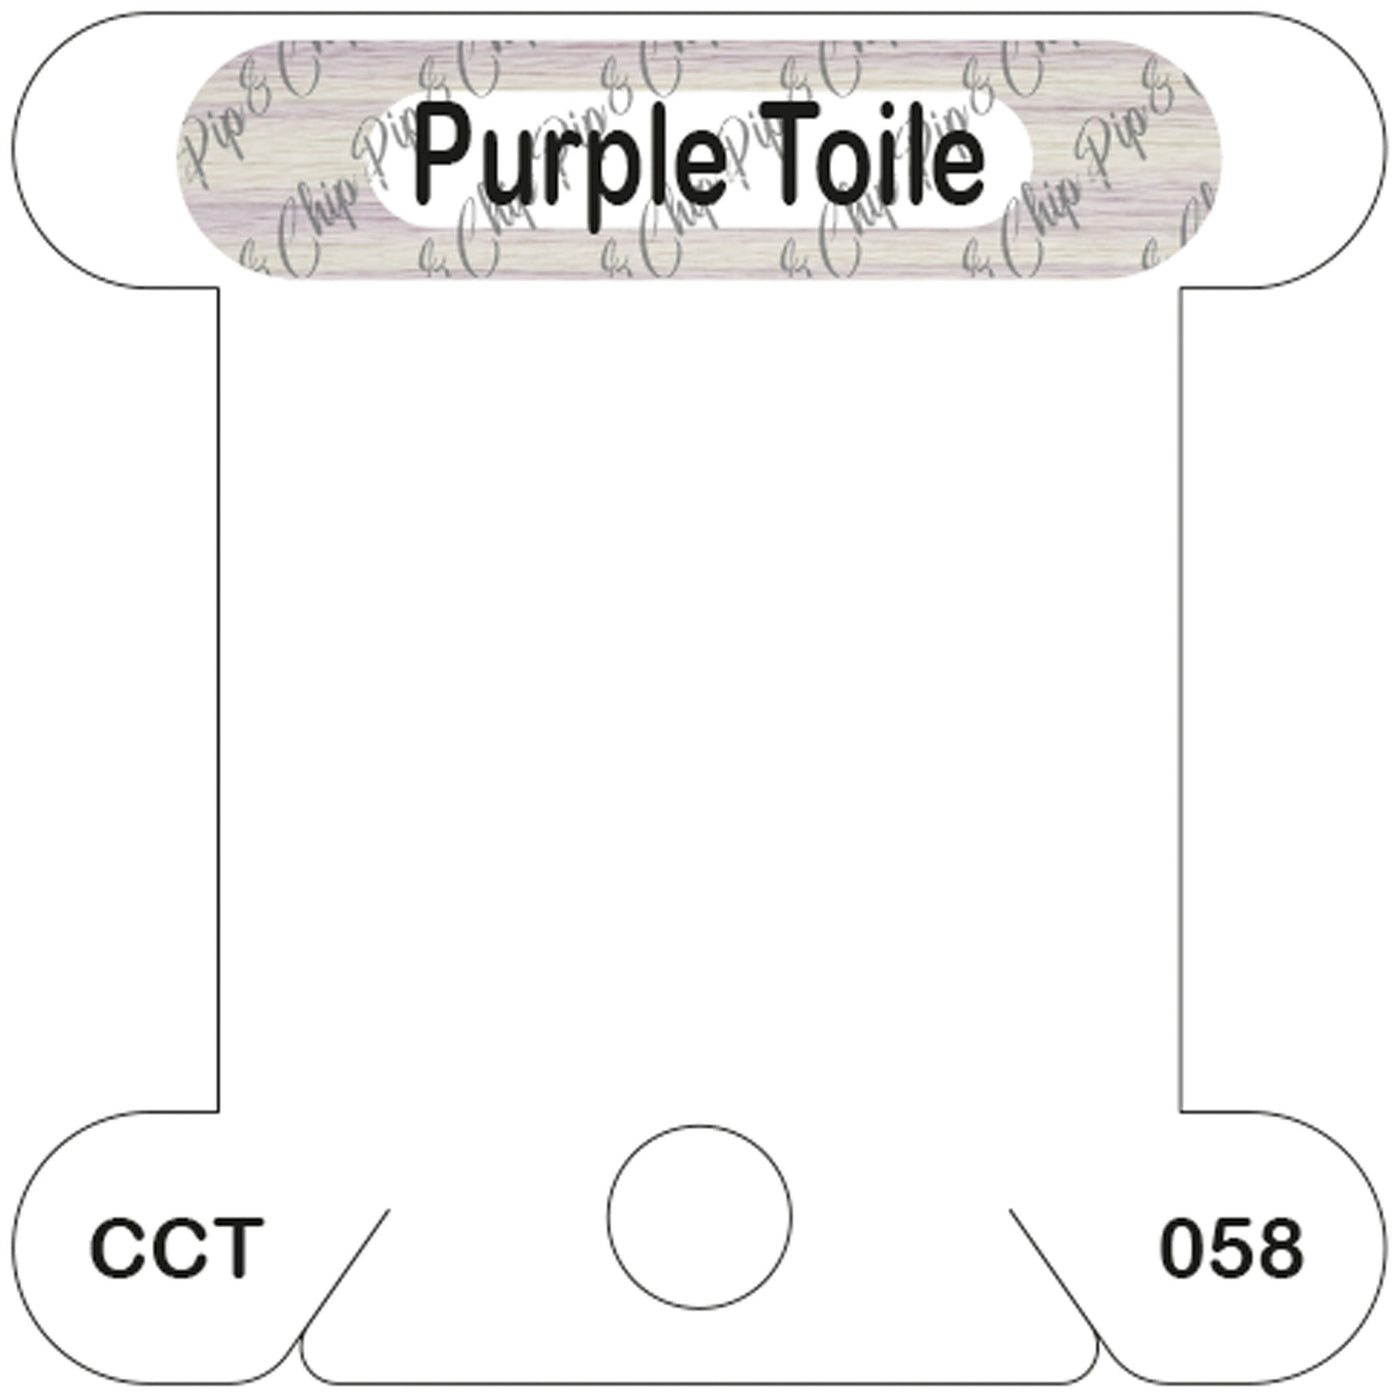 Classic Colorworks Purple Toile acrylic bobbin